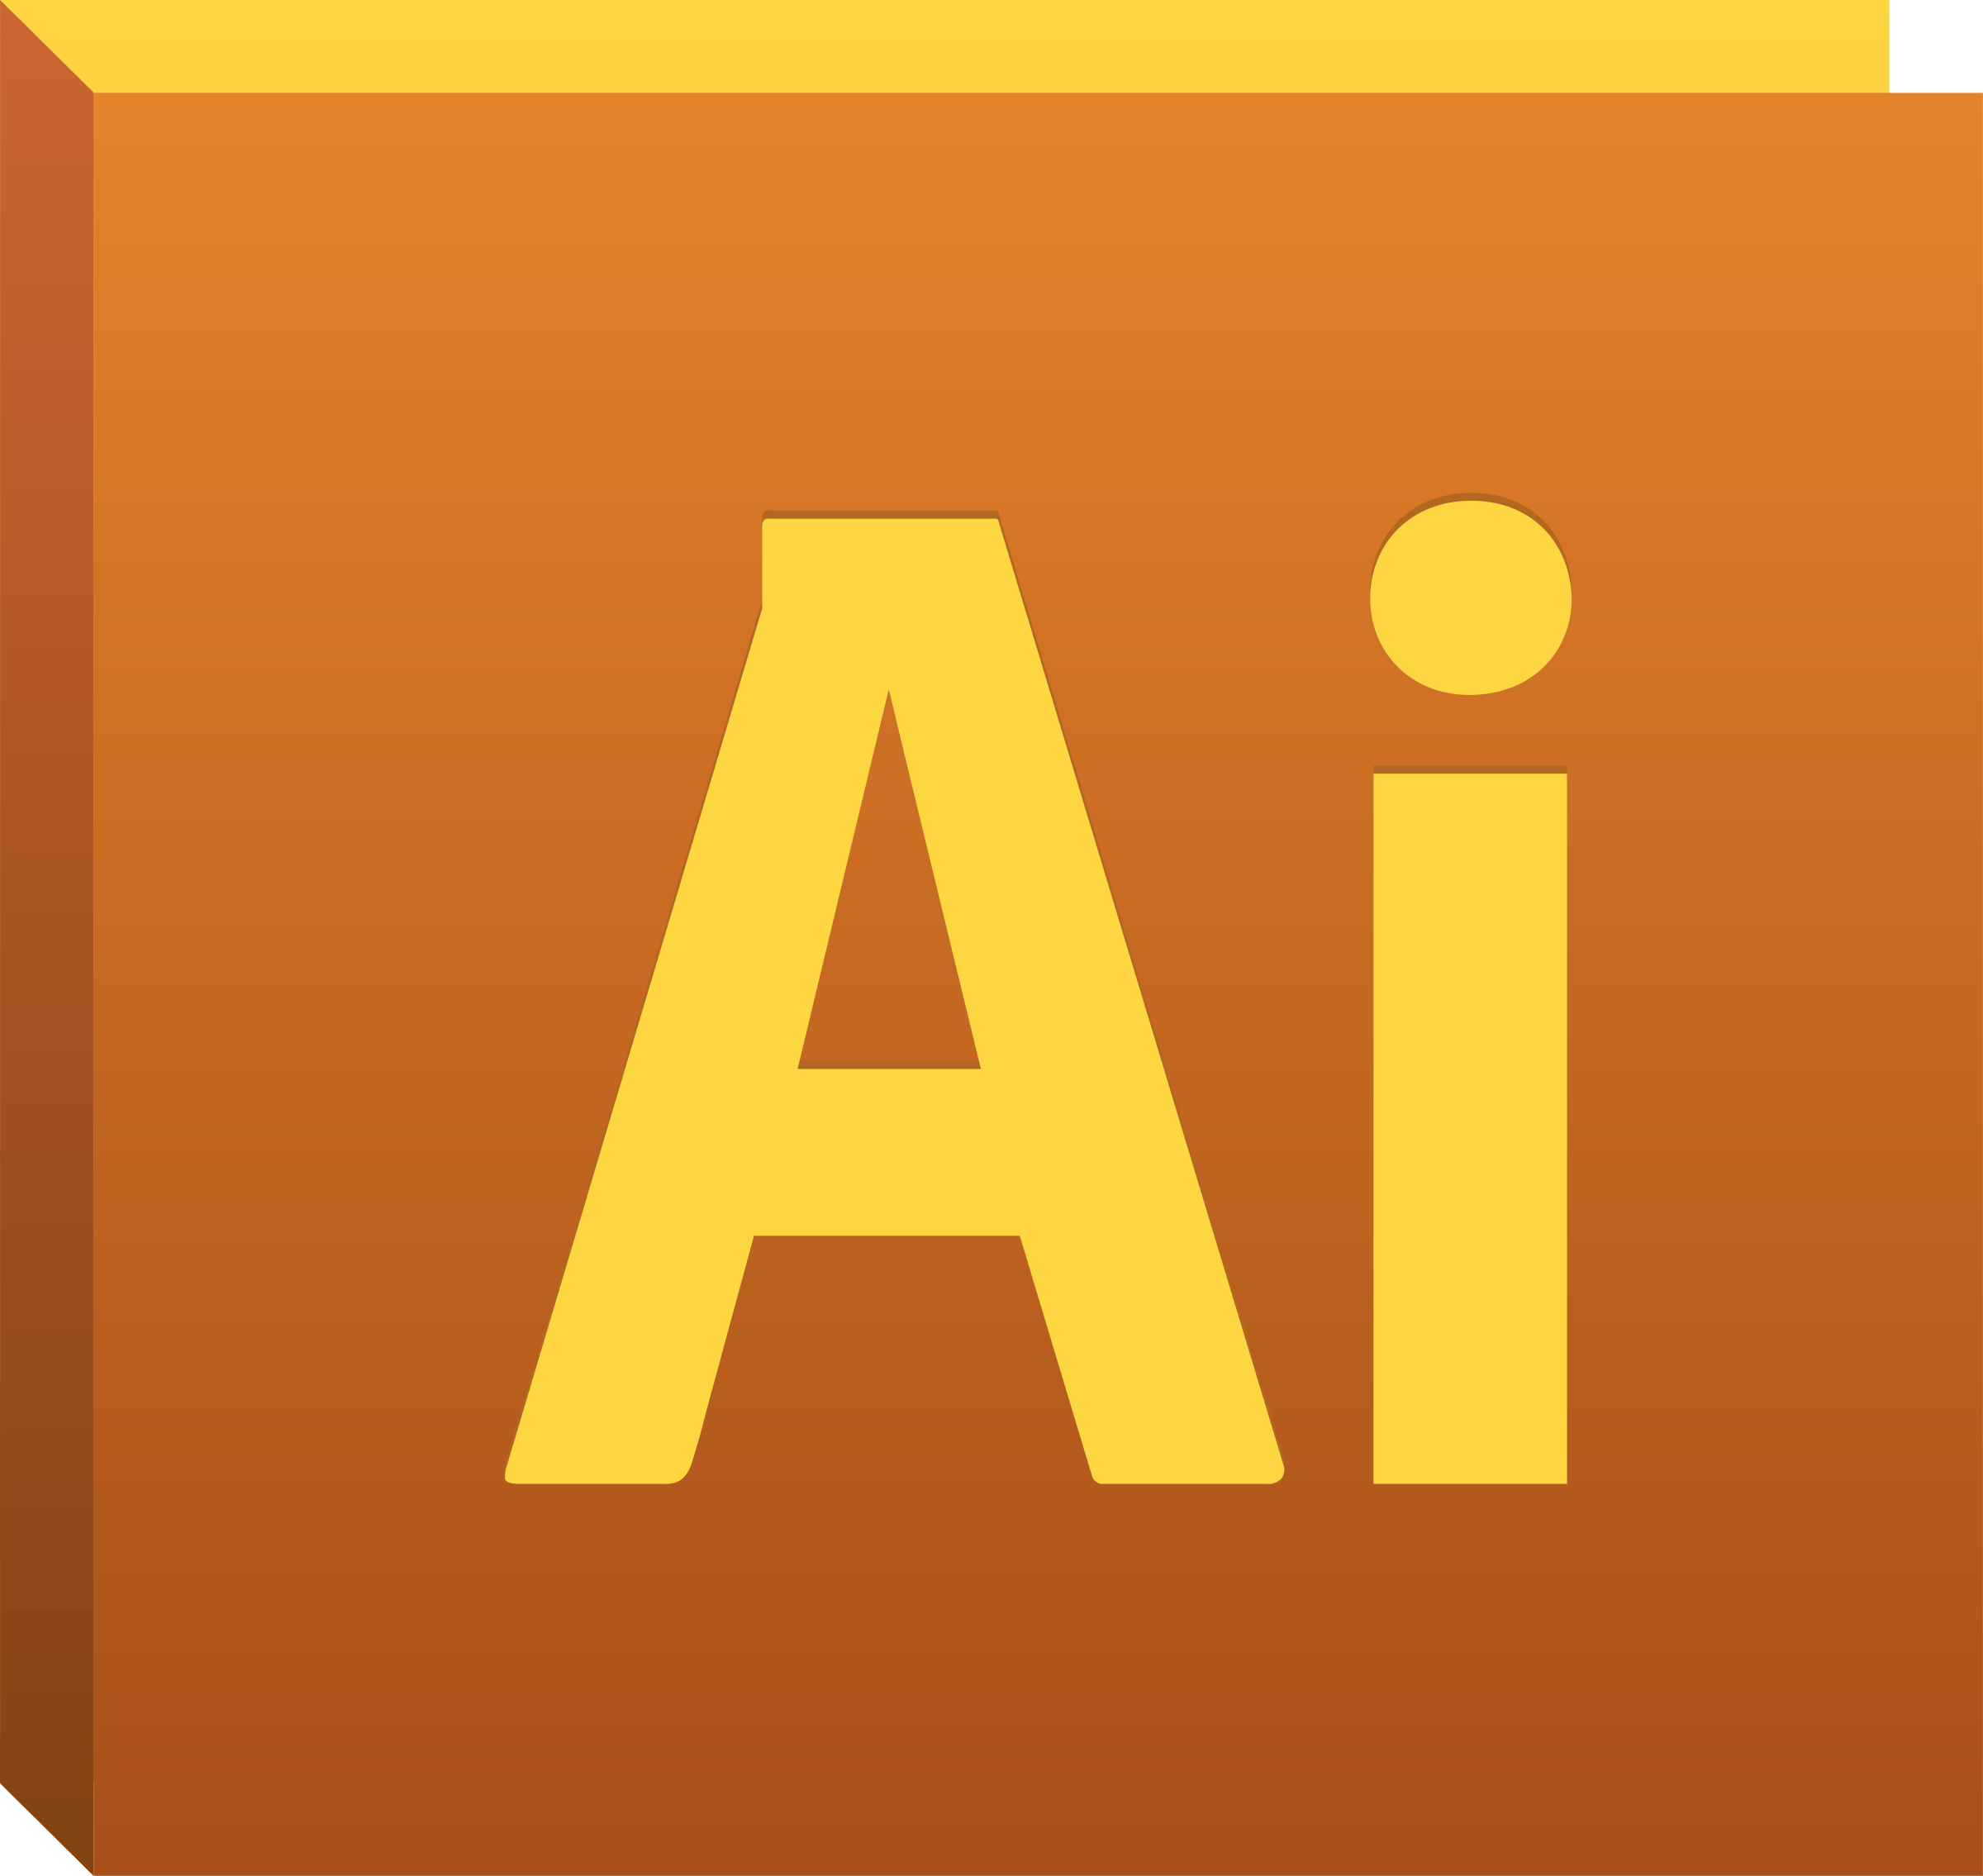 Adobe Illustrator Logo - Adobe Illustrator CS5 Logo PNG Transparent & SVG Vector